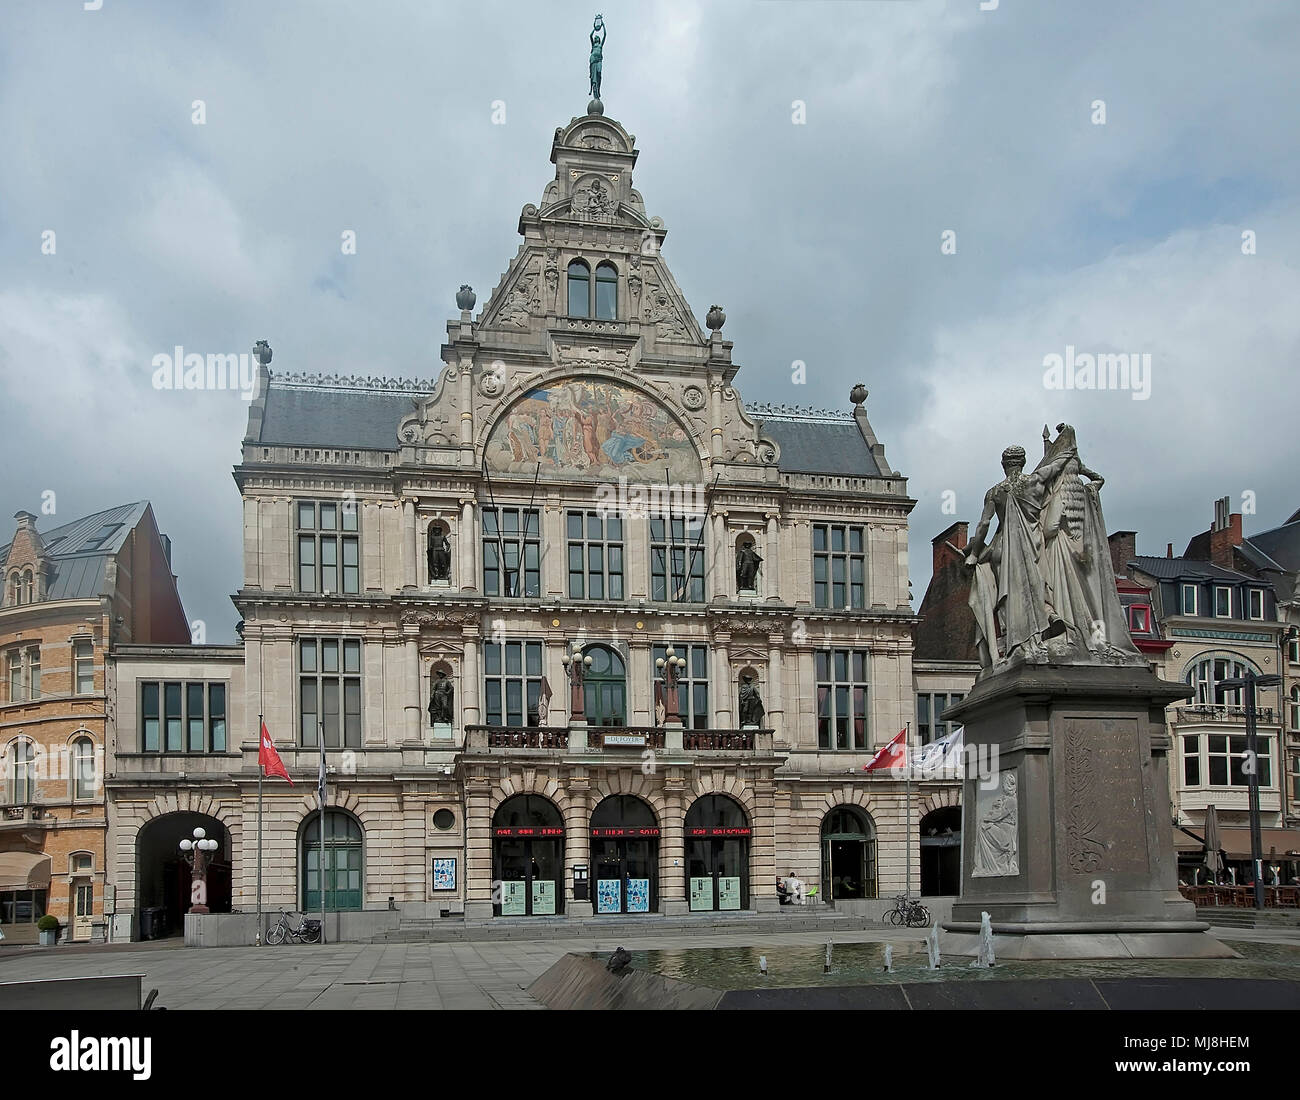 Royal Dutch Theatre located on Sint-Baafsplein Square, Ghent, Belgium     Photo © Fabio Mazzarella/Sintesi/Alamy Stock Photo Stock Photo